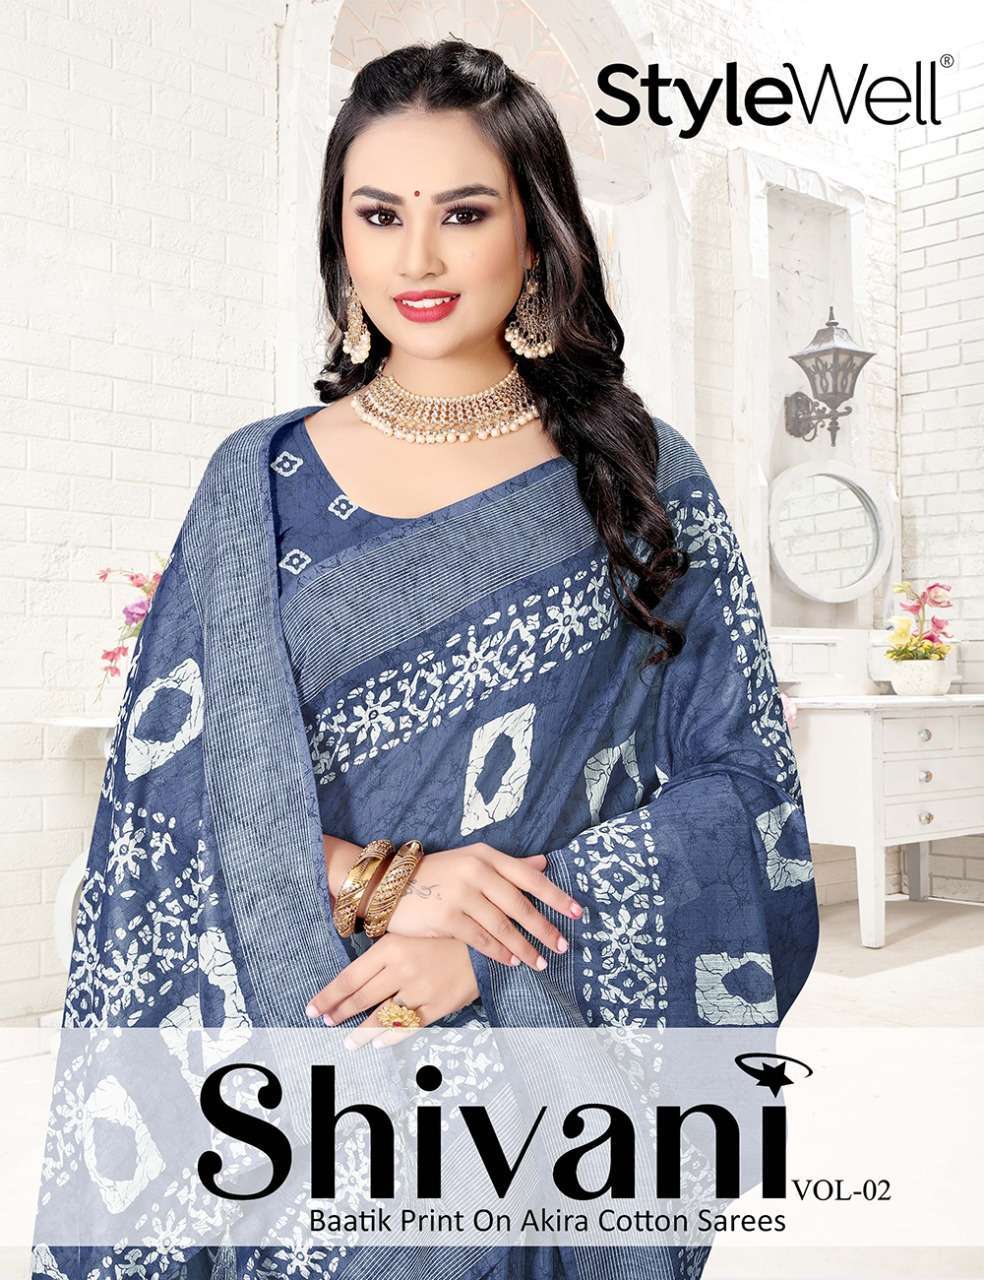 stylewell shivani vol 2 series 977-982 akira cotton saree